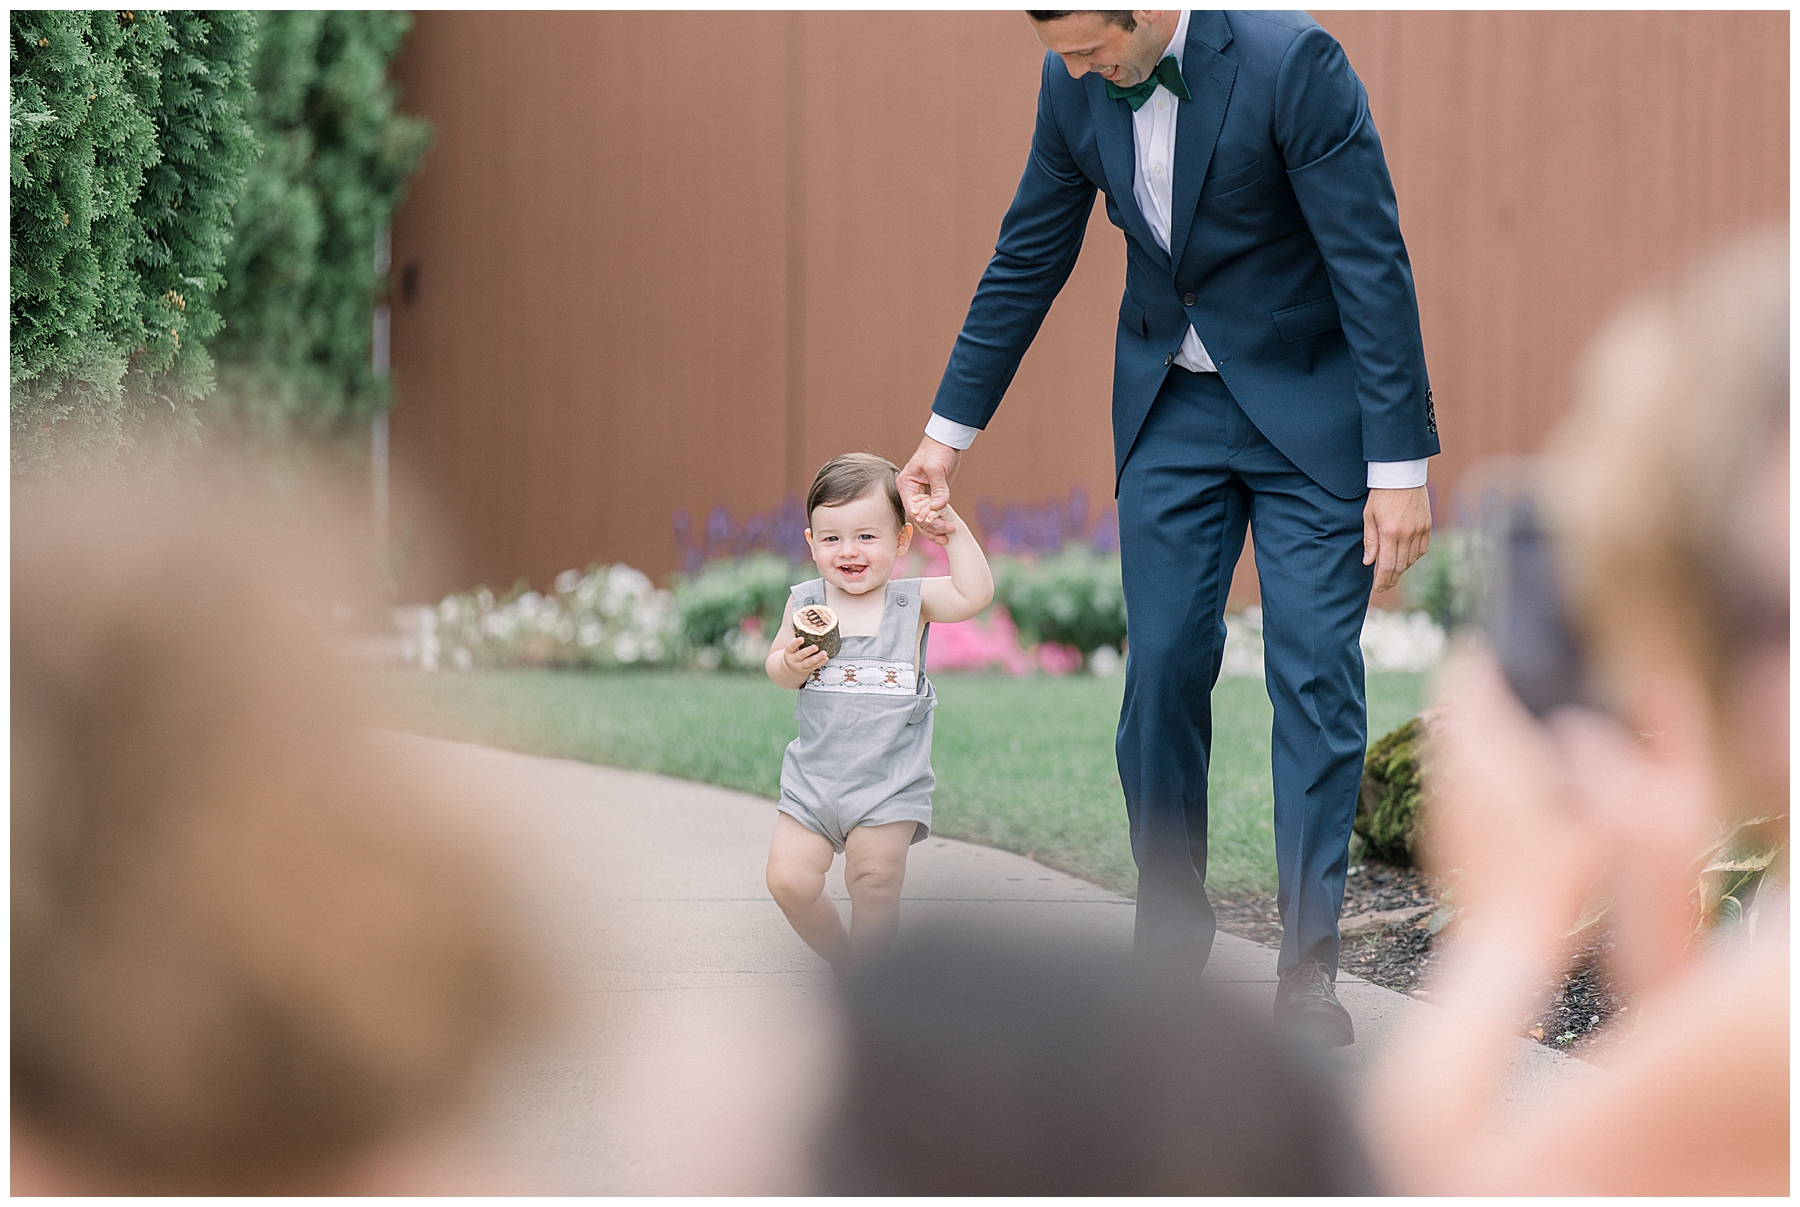 little kid at wedding ceremony